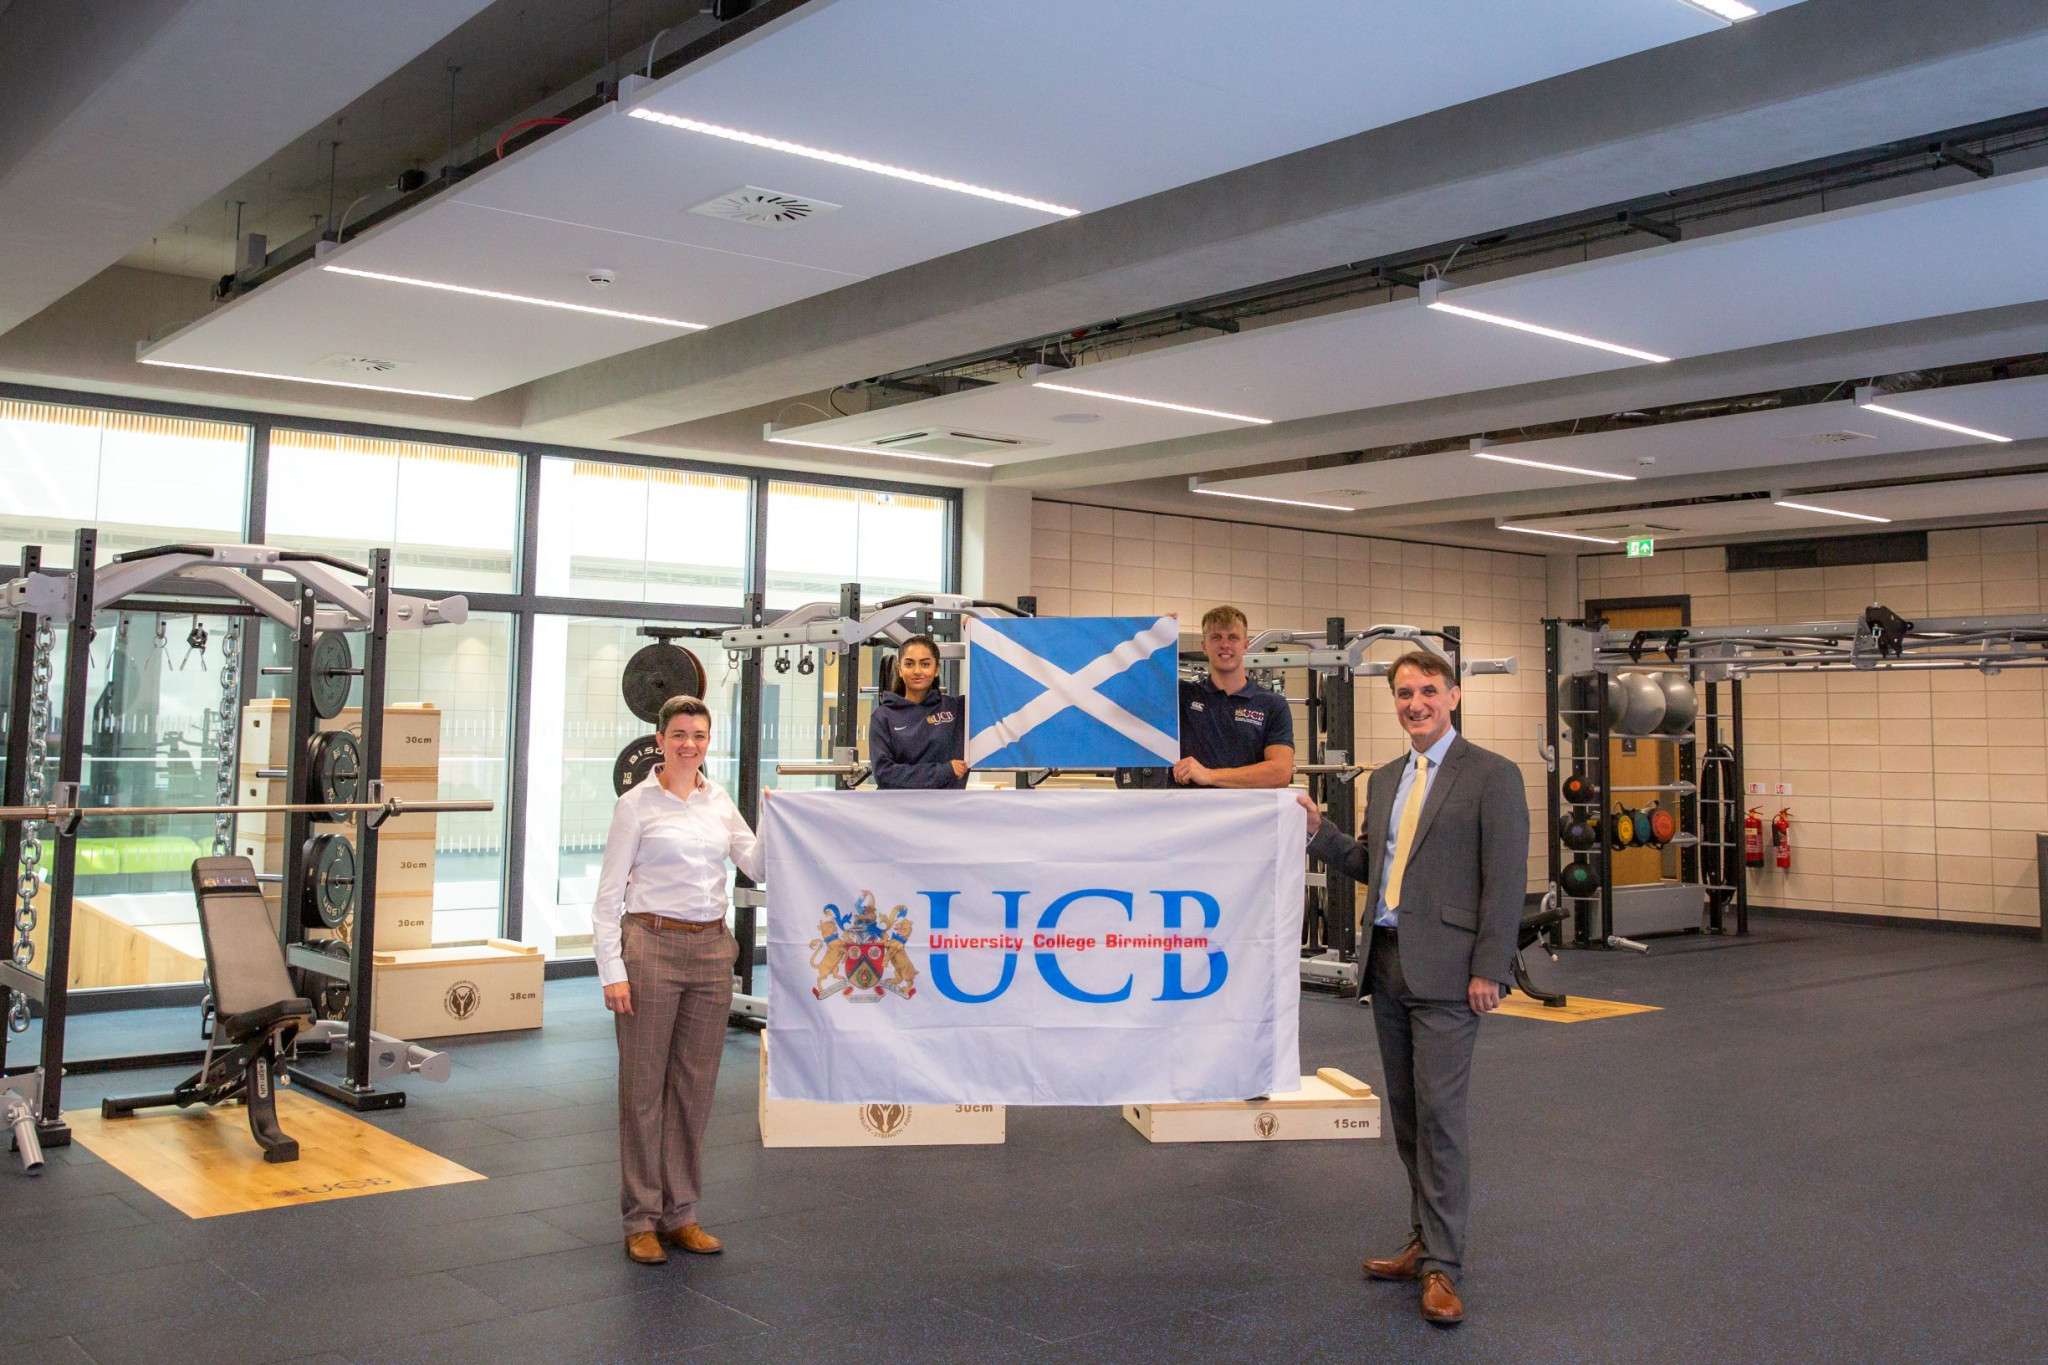 University College Birmingham to host Scotland at 2022 Commonwealth Games